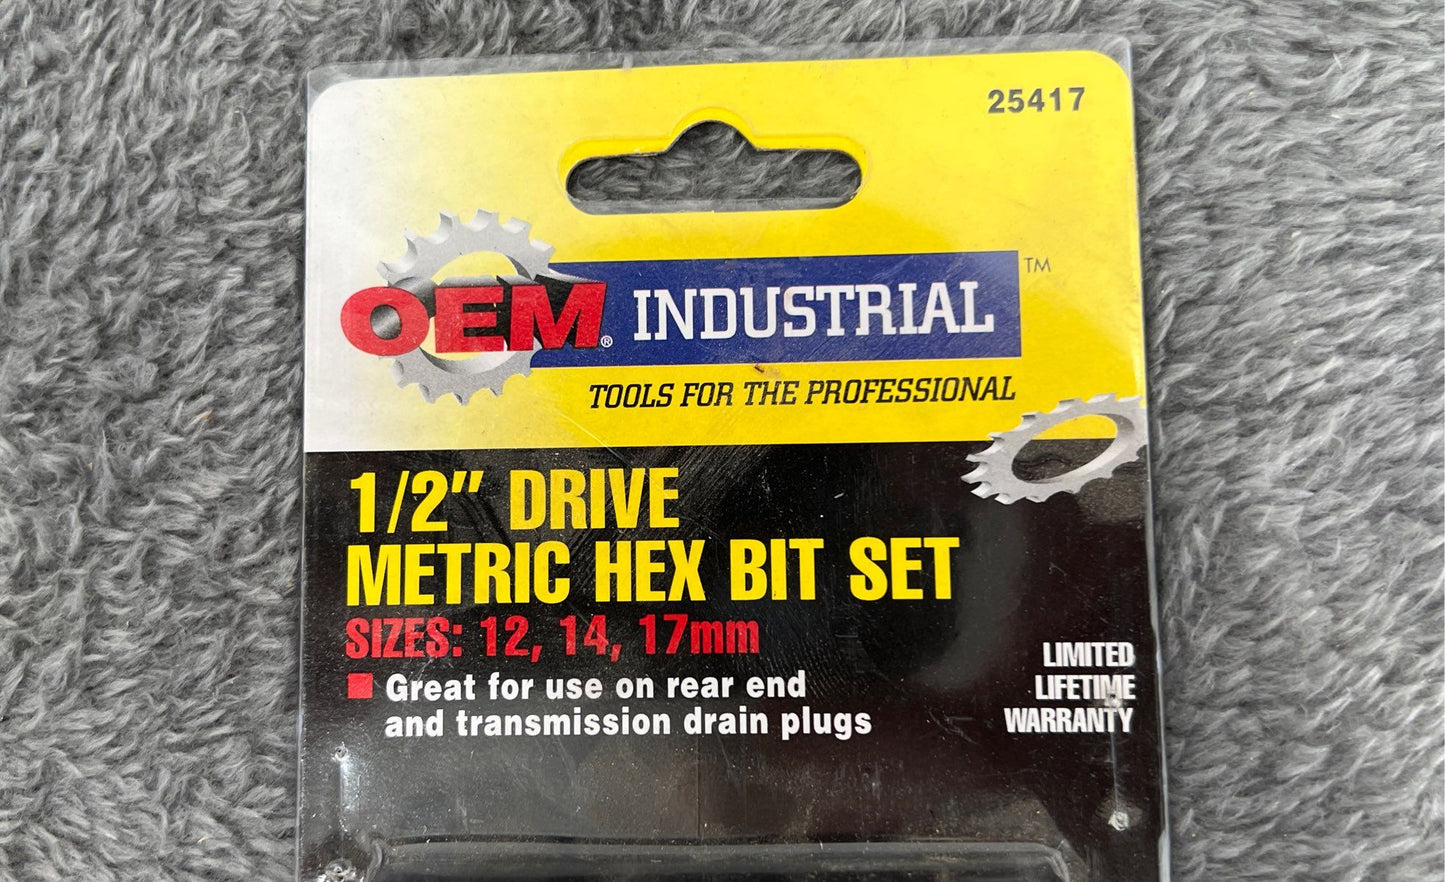 OEM Industrial 1/2" Drive Metric Hex Bit Set Sizes: 12, 14, 17mm #25417